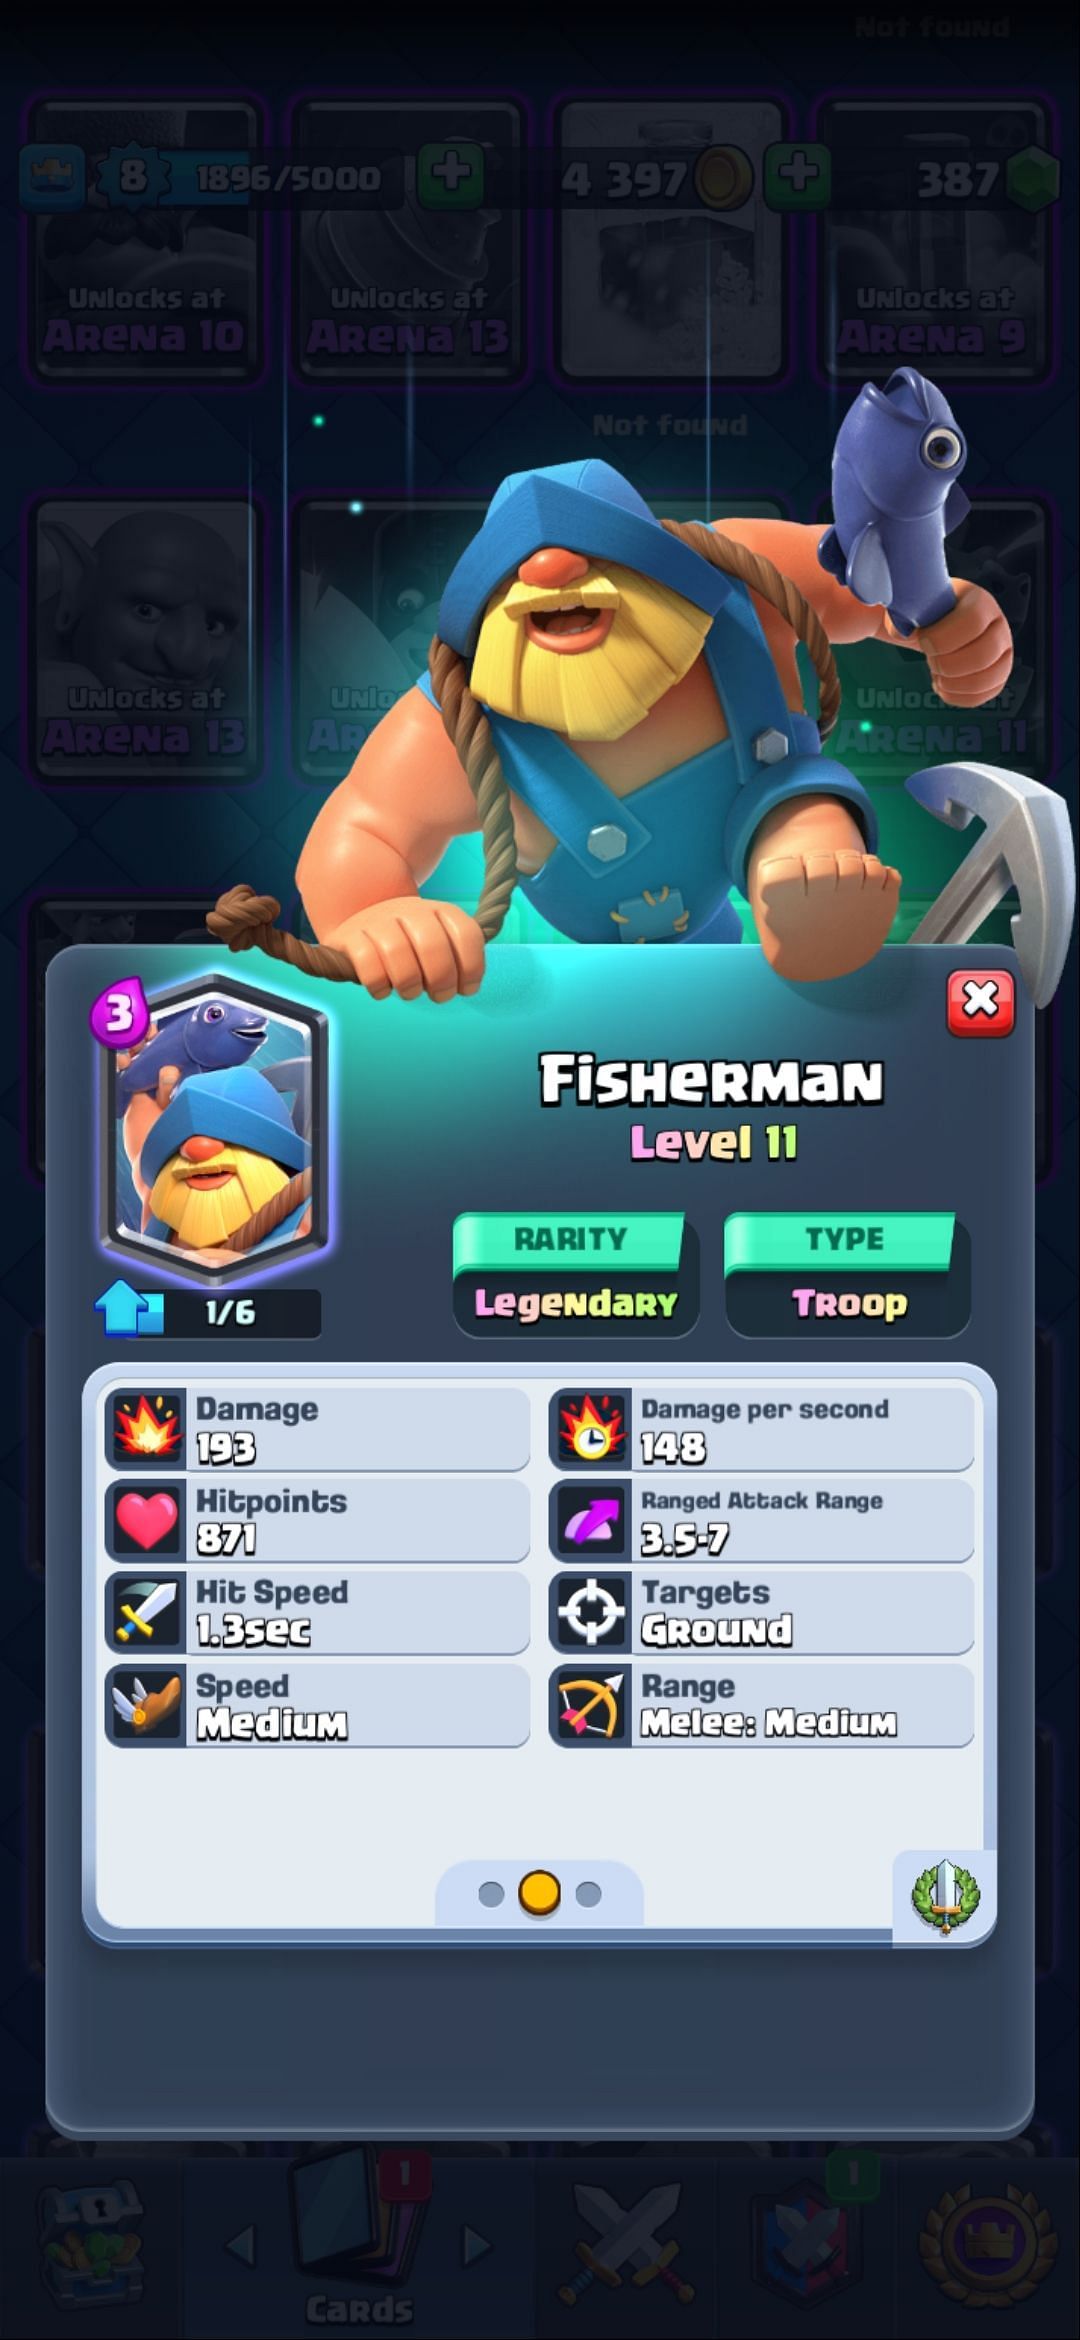 The Fisherman card (Image via Sportskeeda)